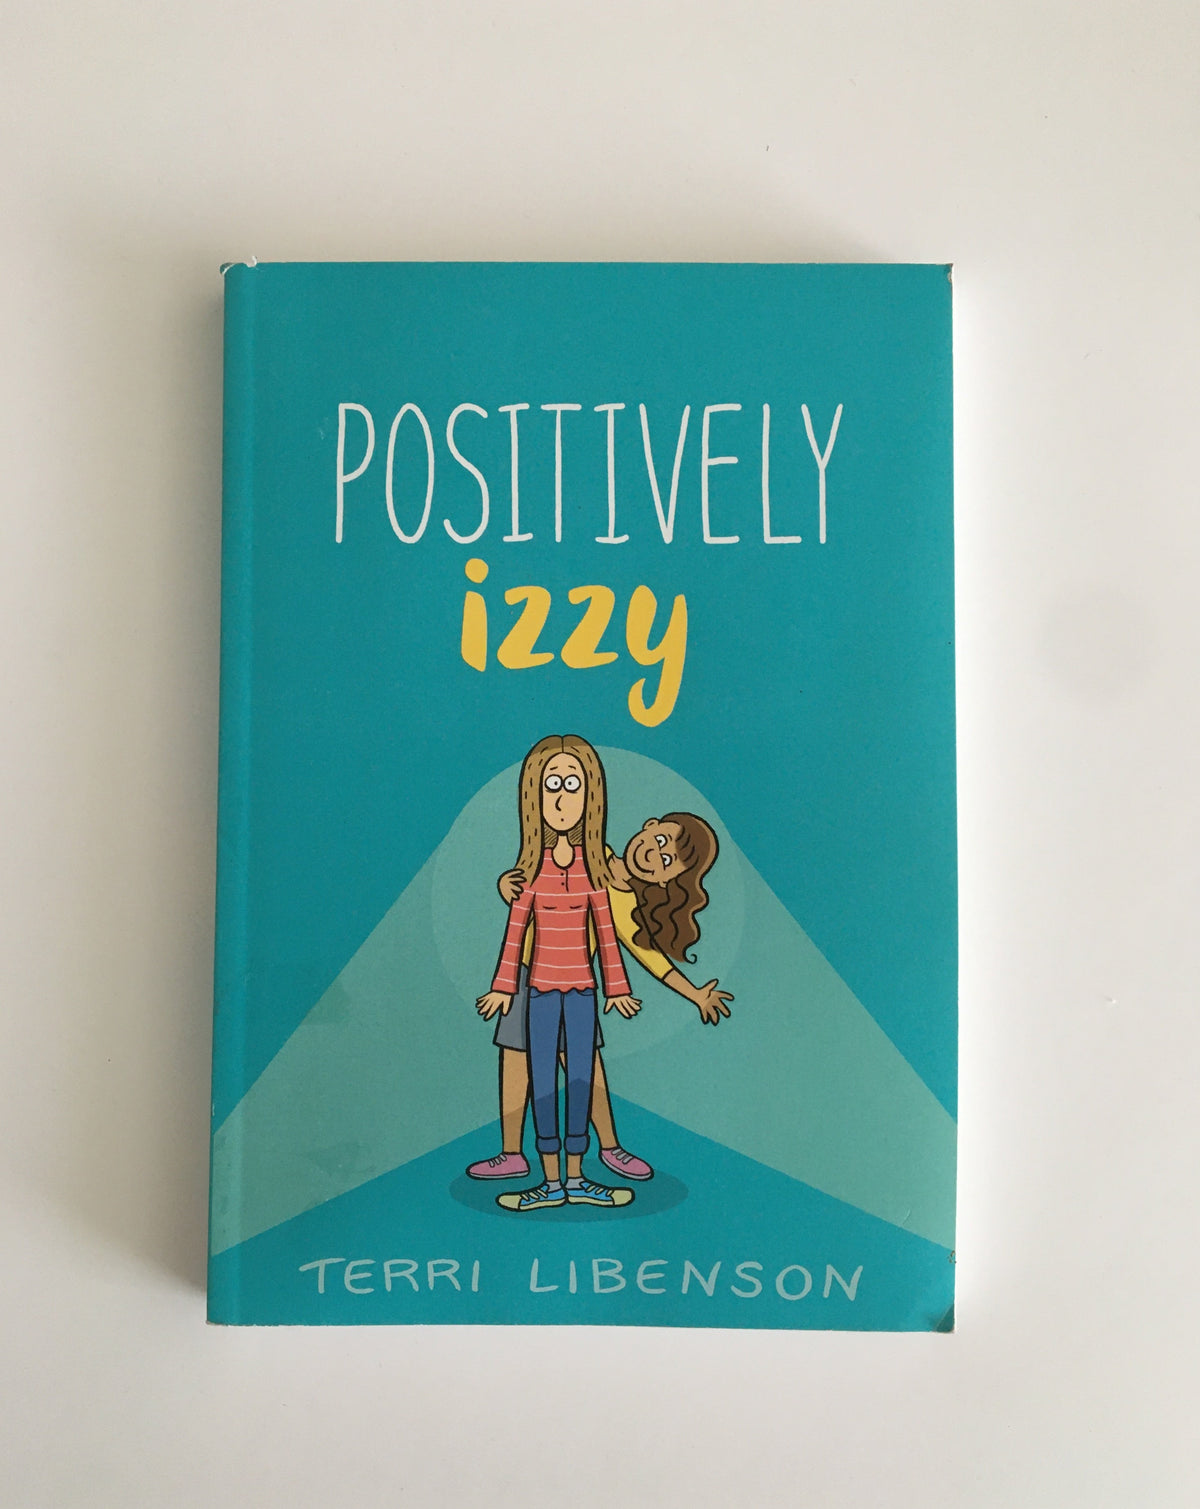 Positively Izzy by Terri Libenson